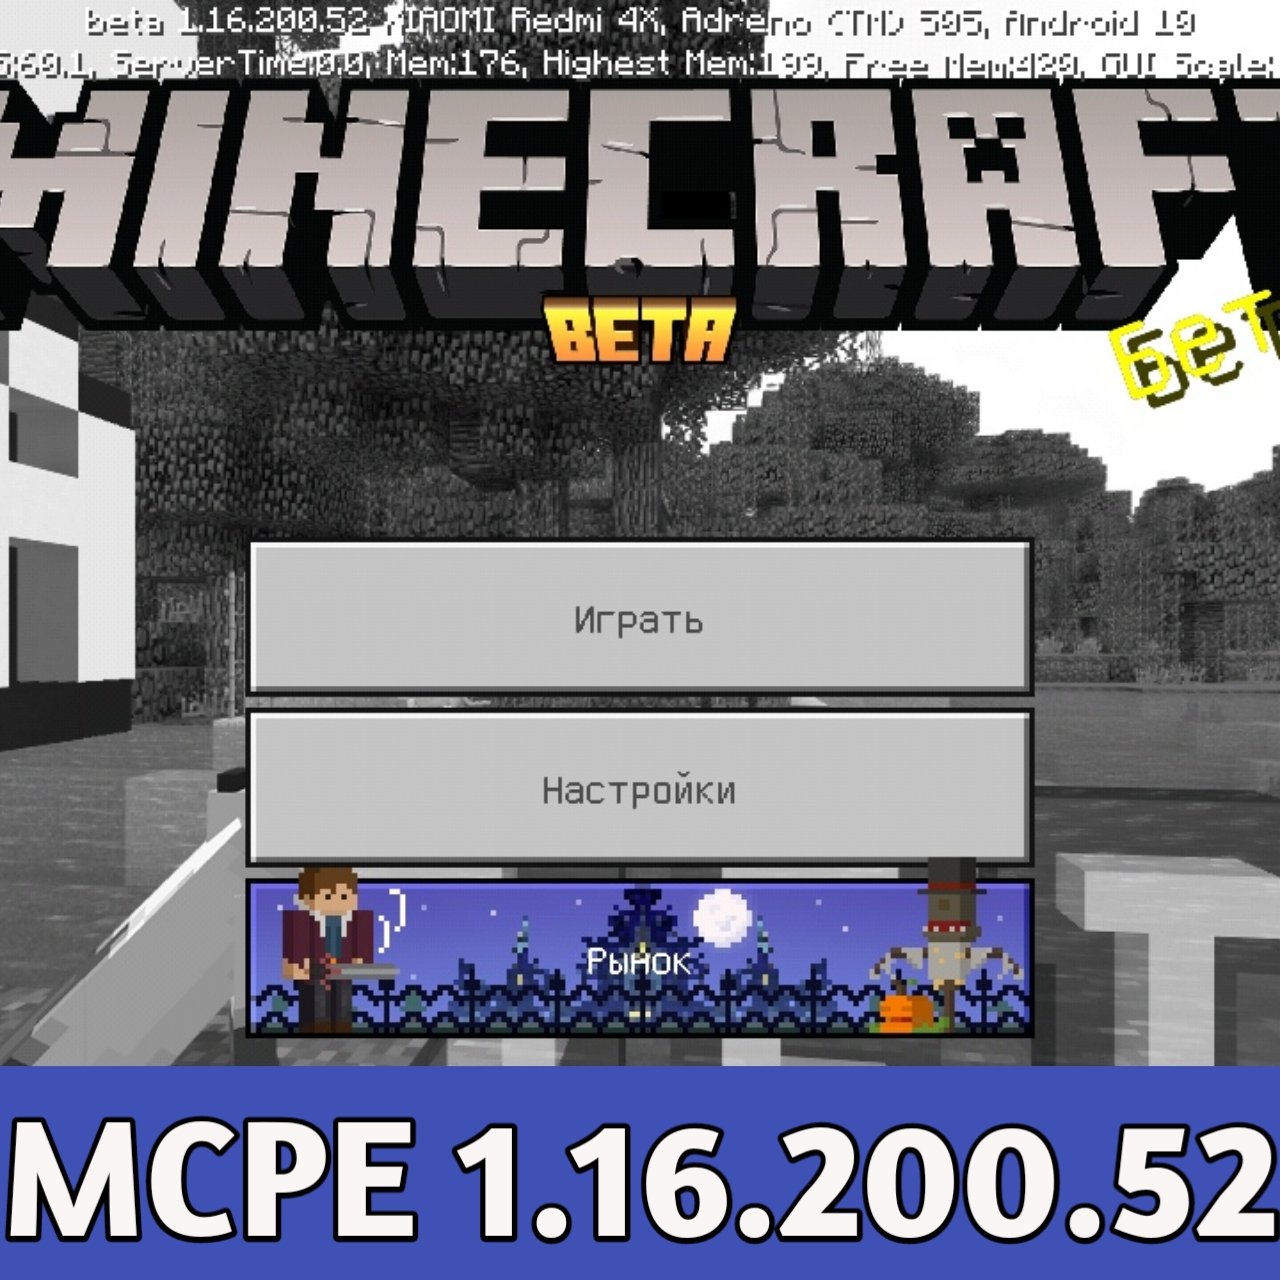 Minecraft PE 1.16.100.52. Download Minecraft PE 1.16.100.52…, by Brandon  Taylor